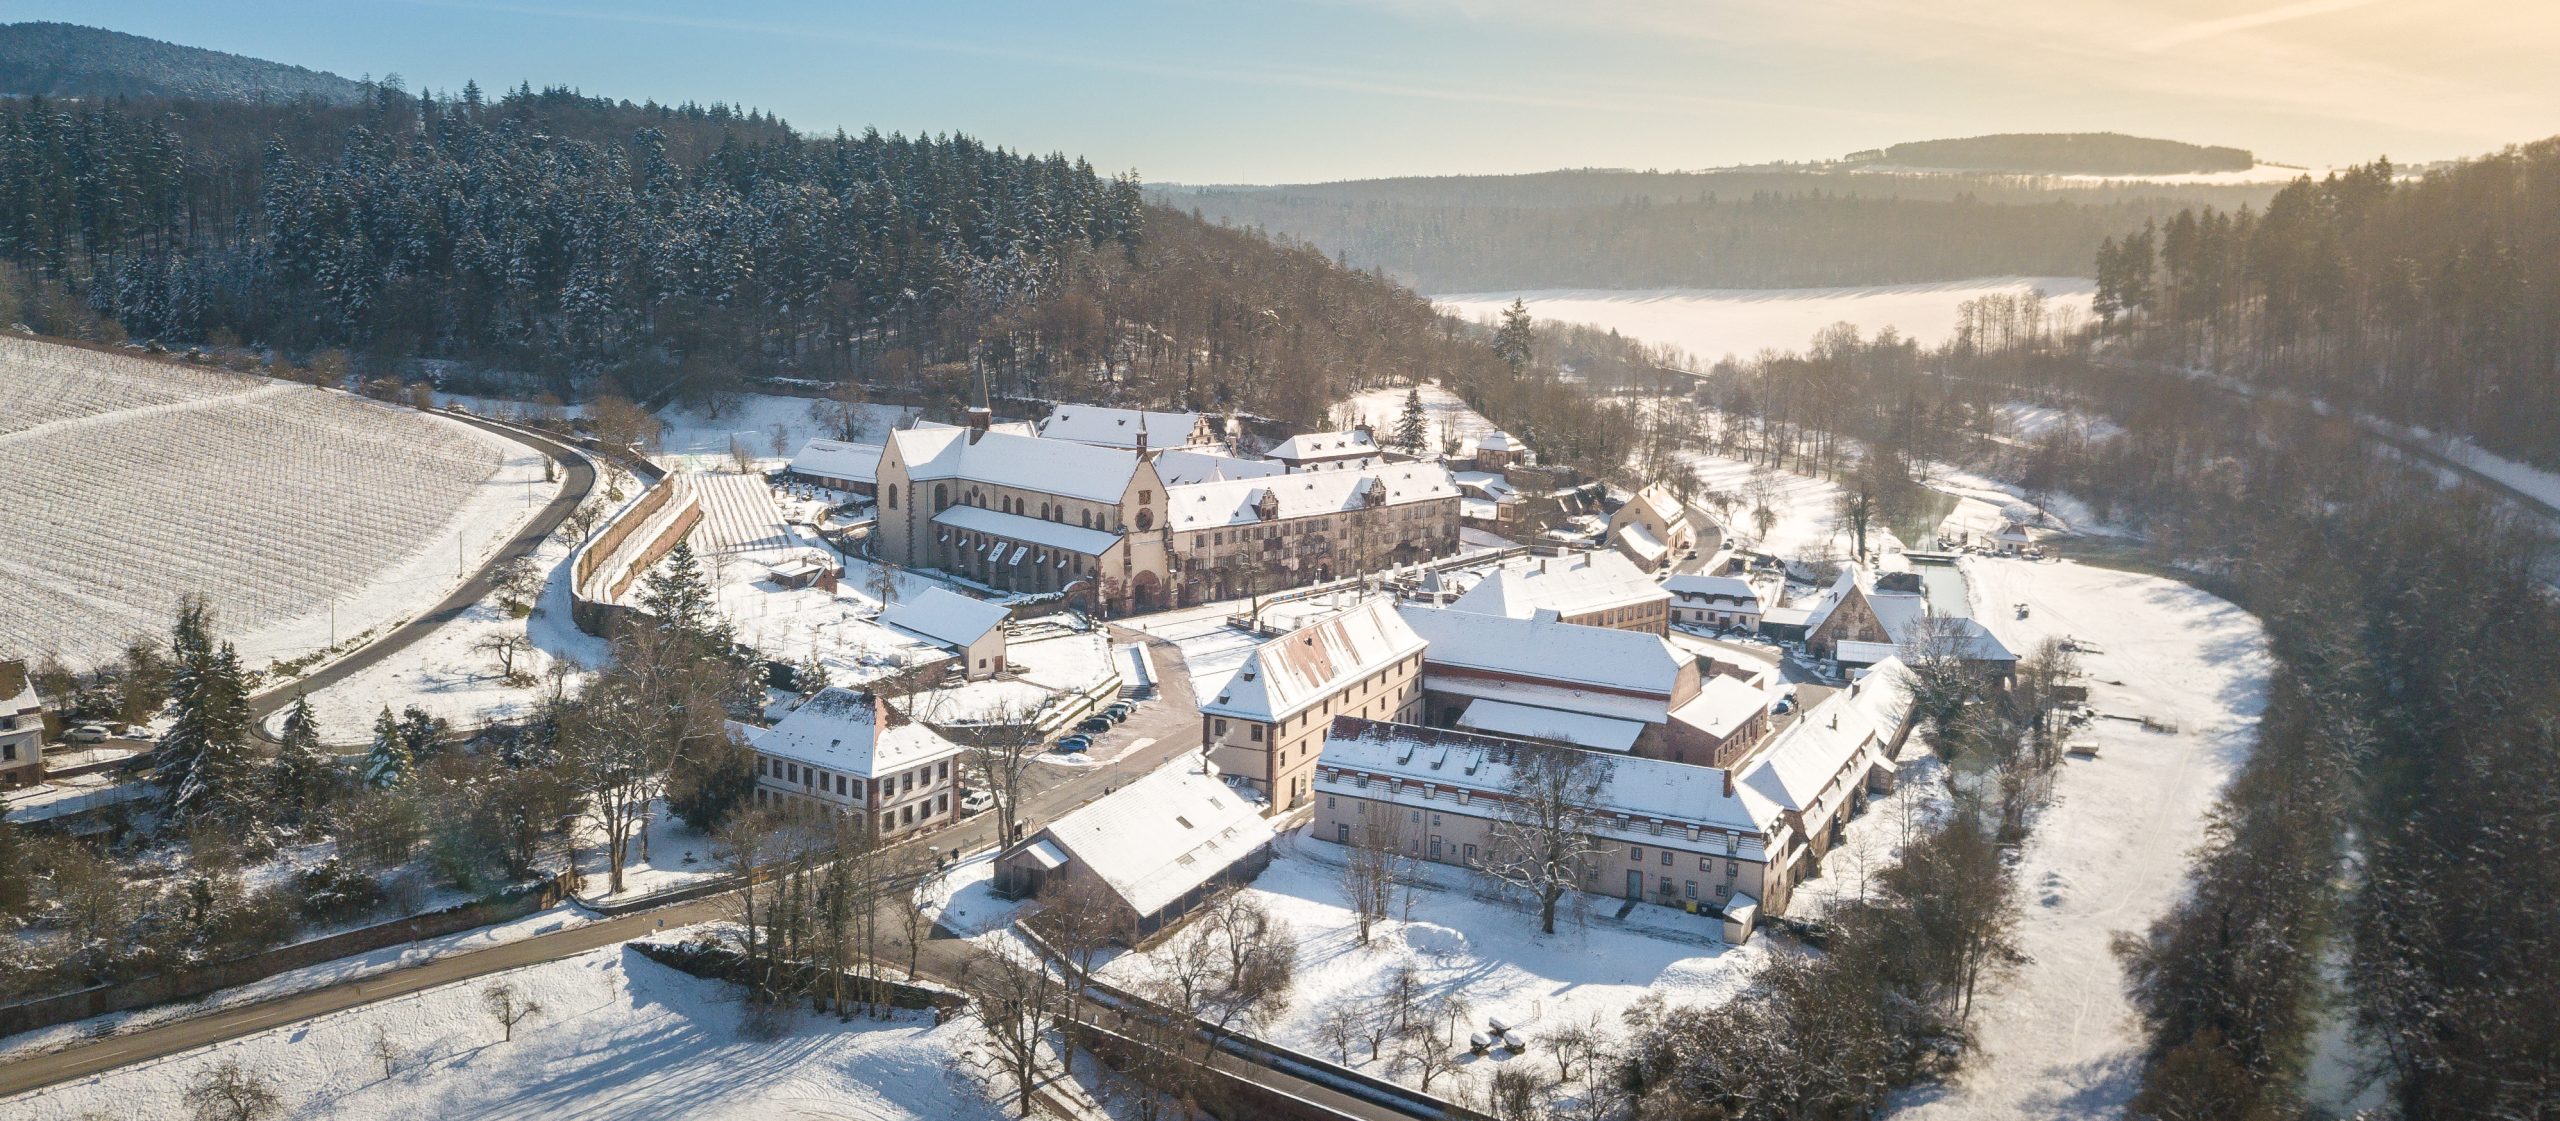 Kloster Bronnach Winter ©Anatoli Brishatjuk